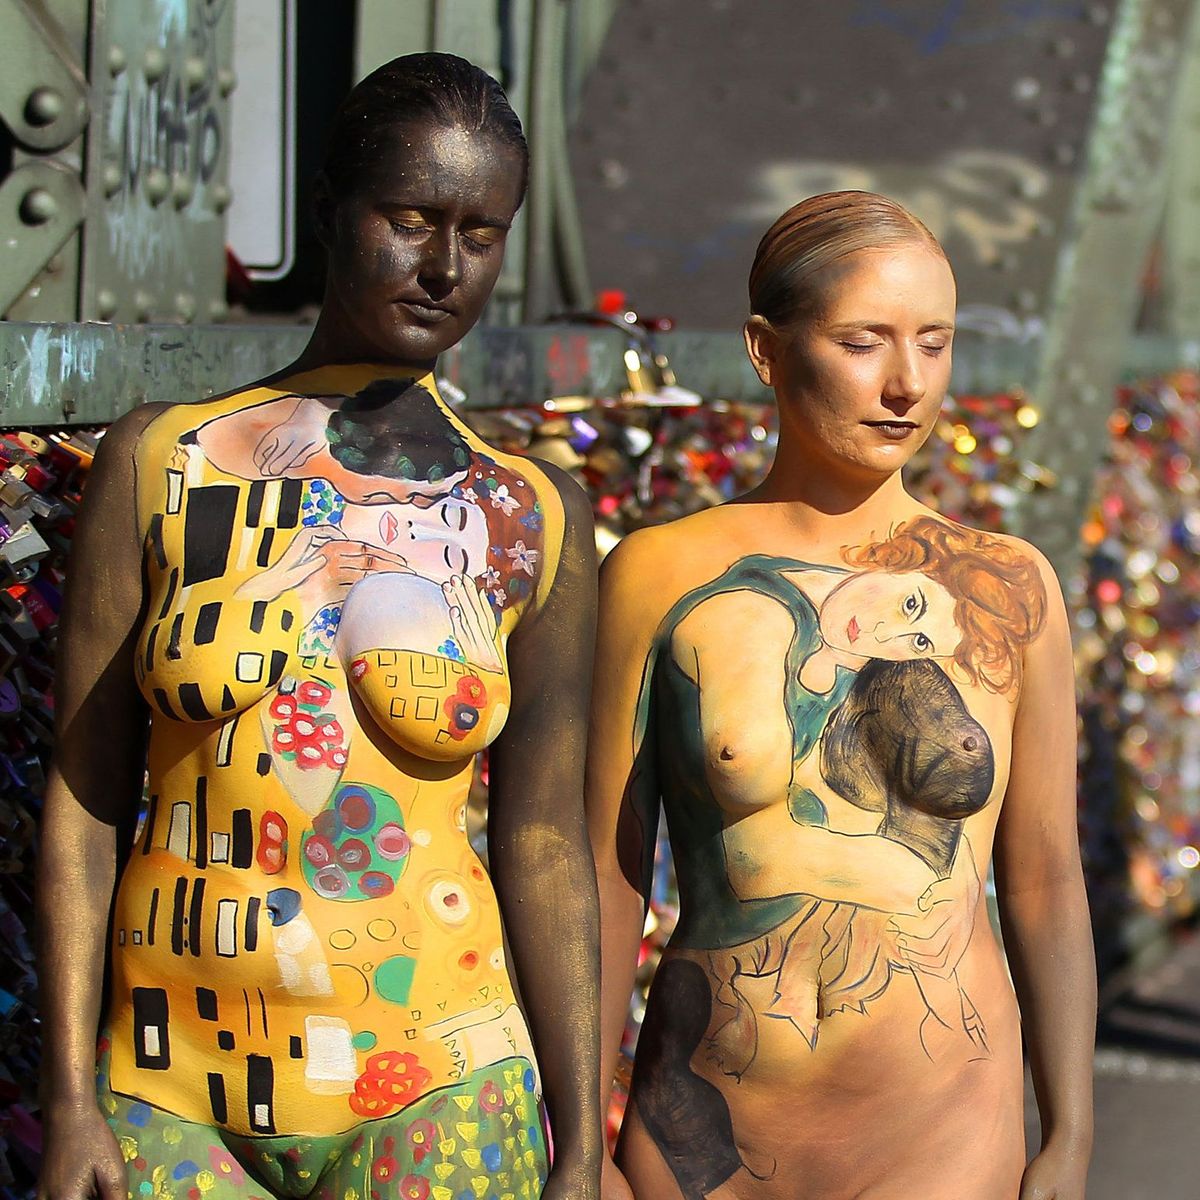 bhavesh faldu share body painting nude women photos